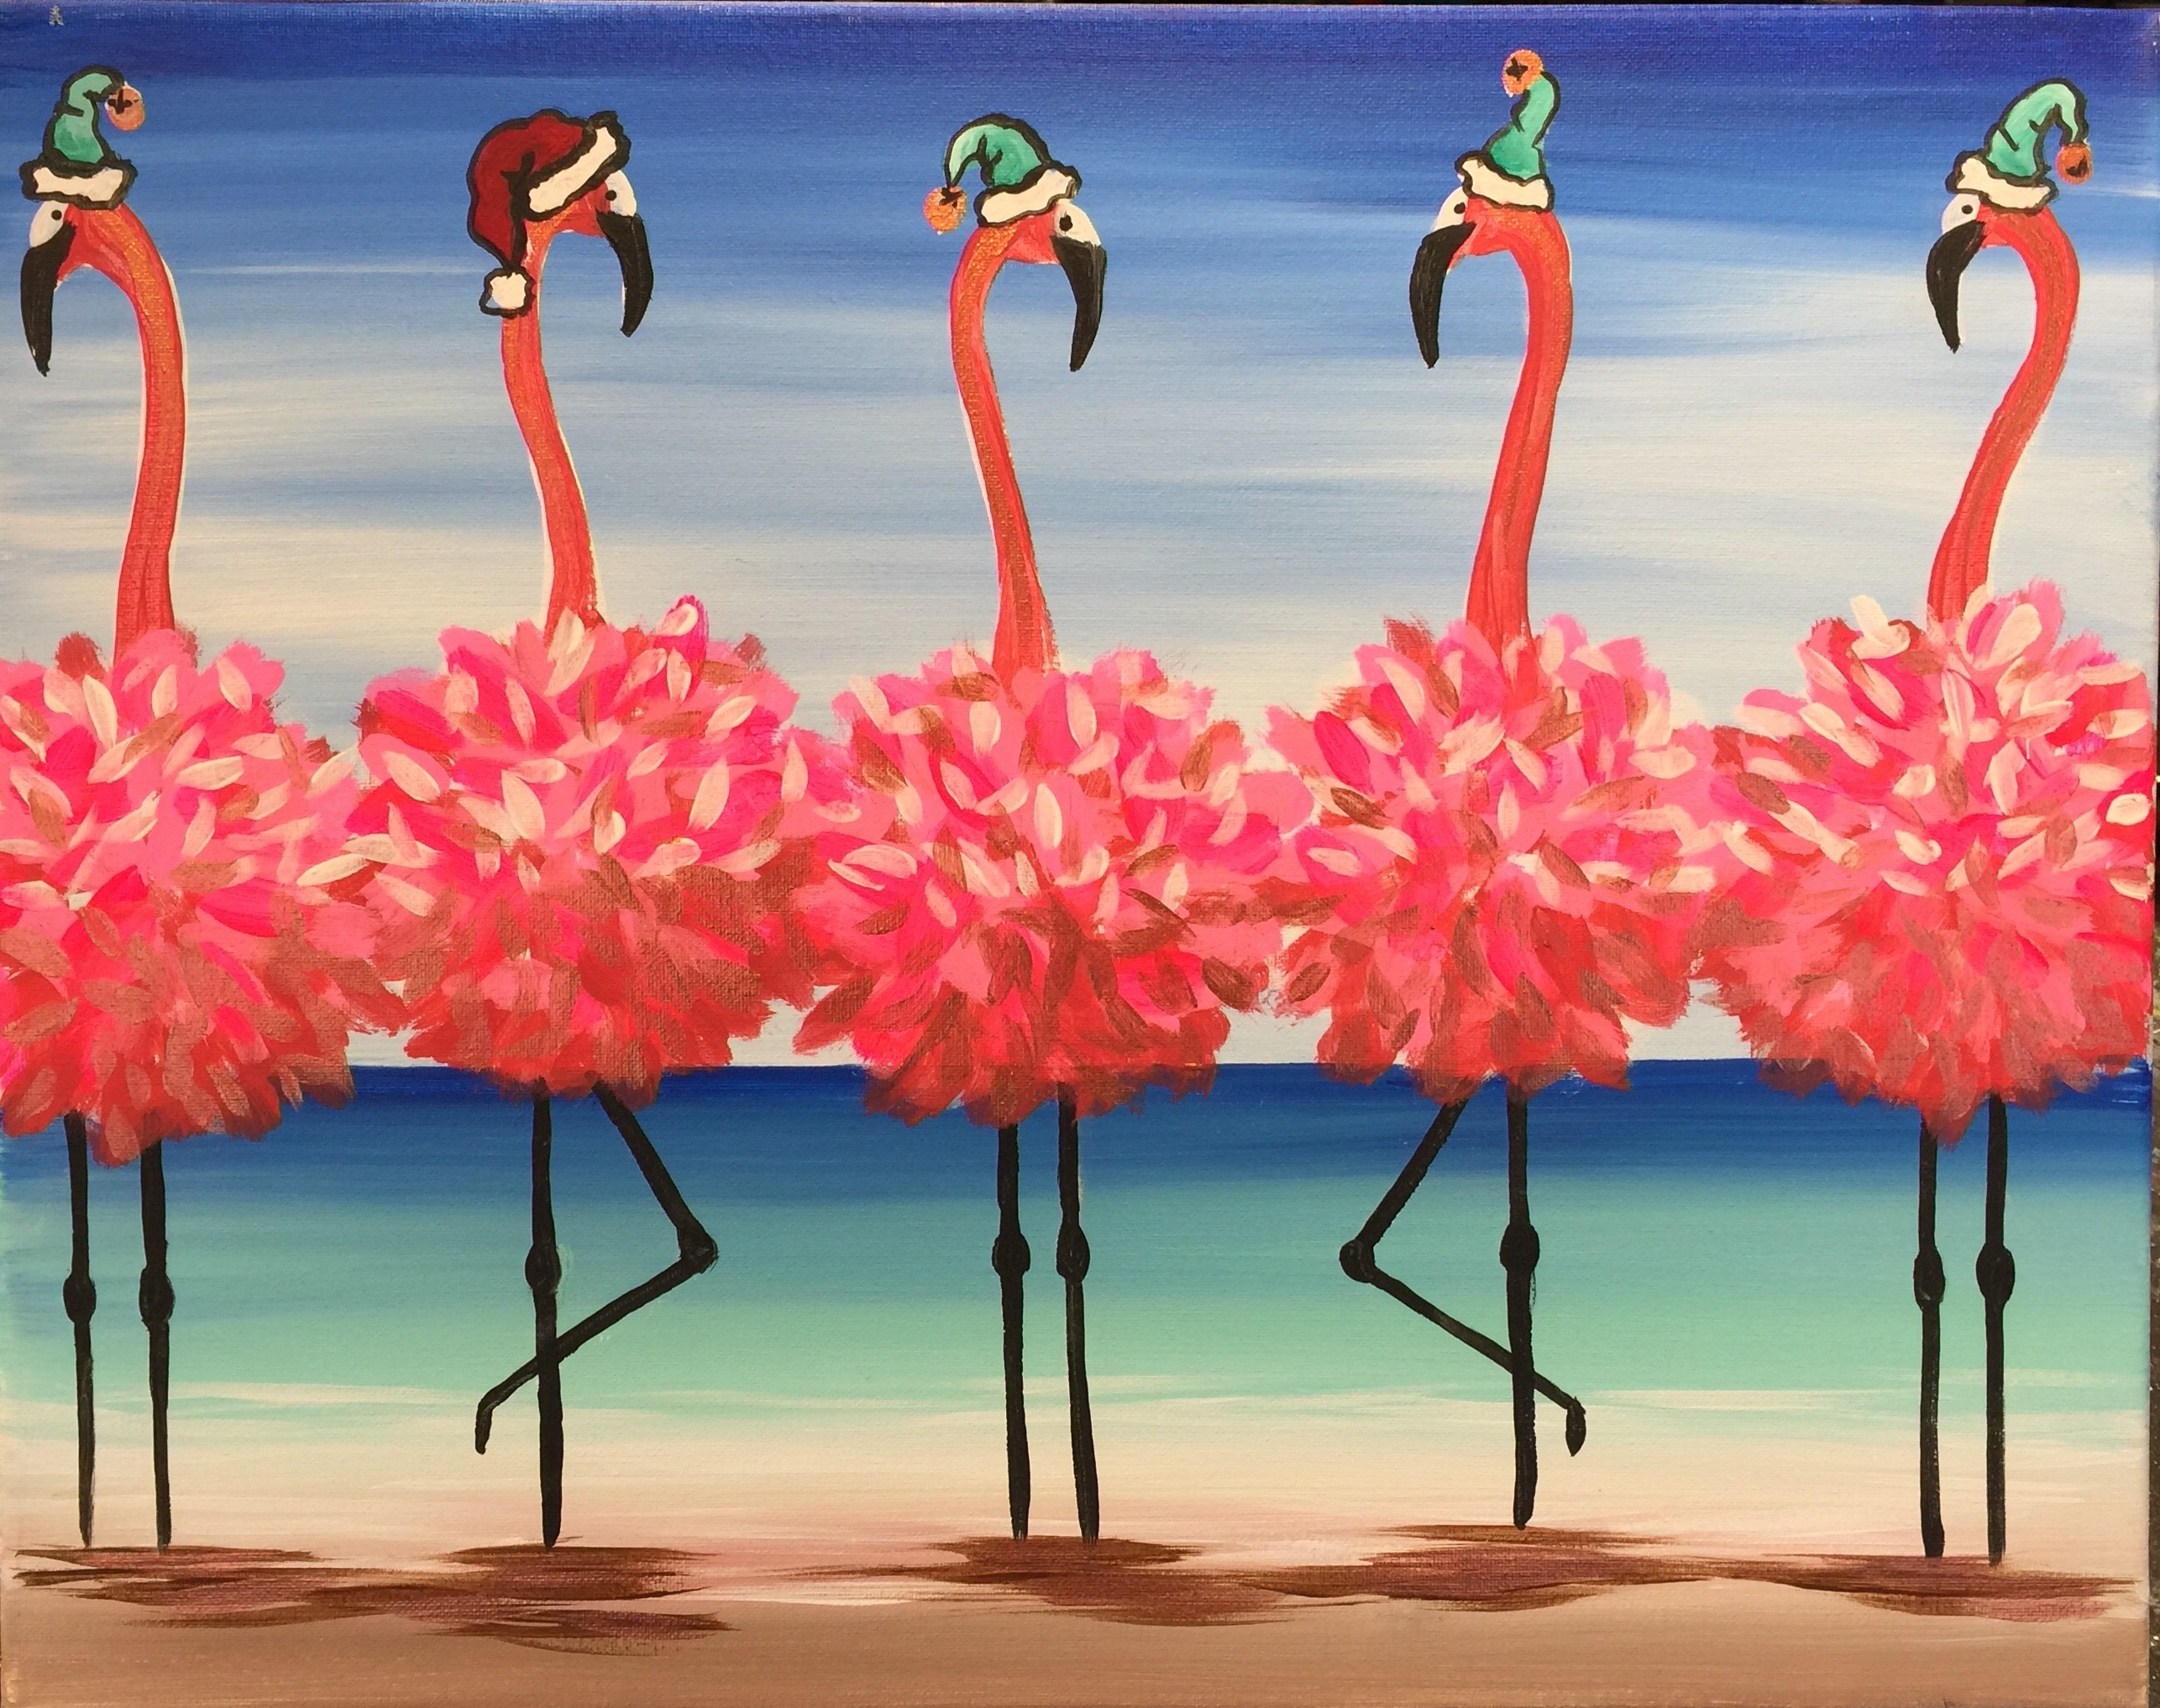 December Promo-Buy 5, Get 1 FREE! Flamingo Beach HOLIDAY!  